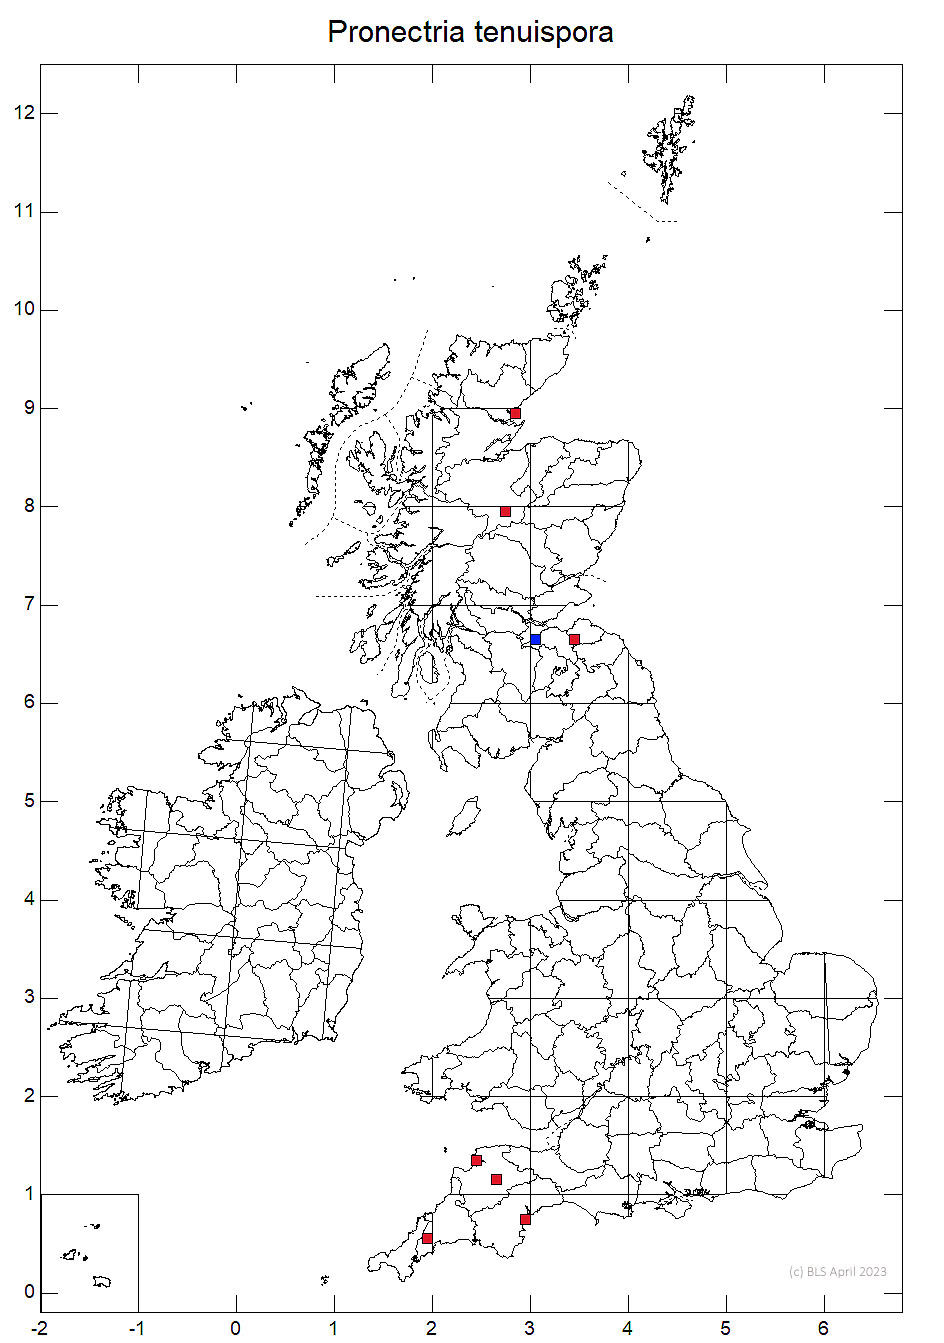 Pronectria tenuispora 10km sq distribution map